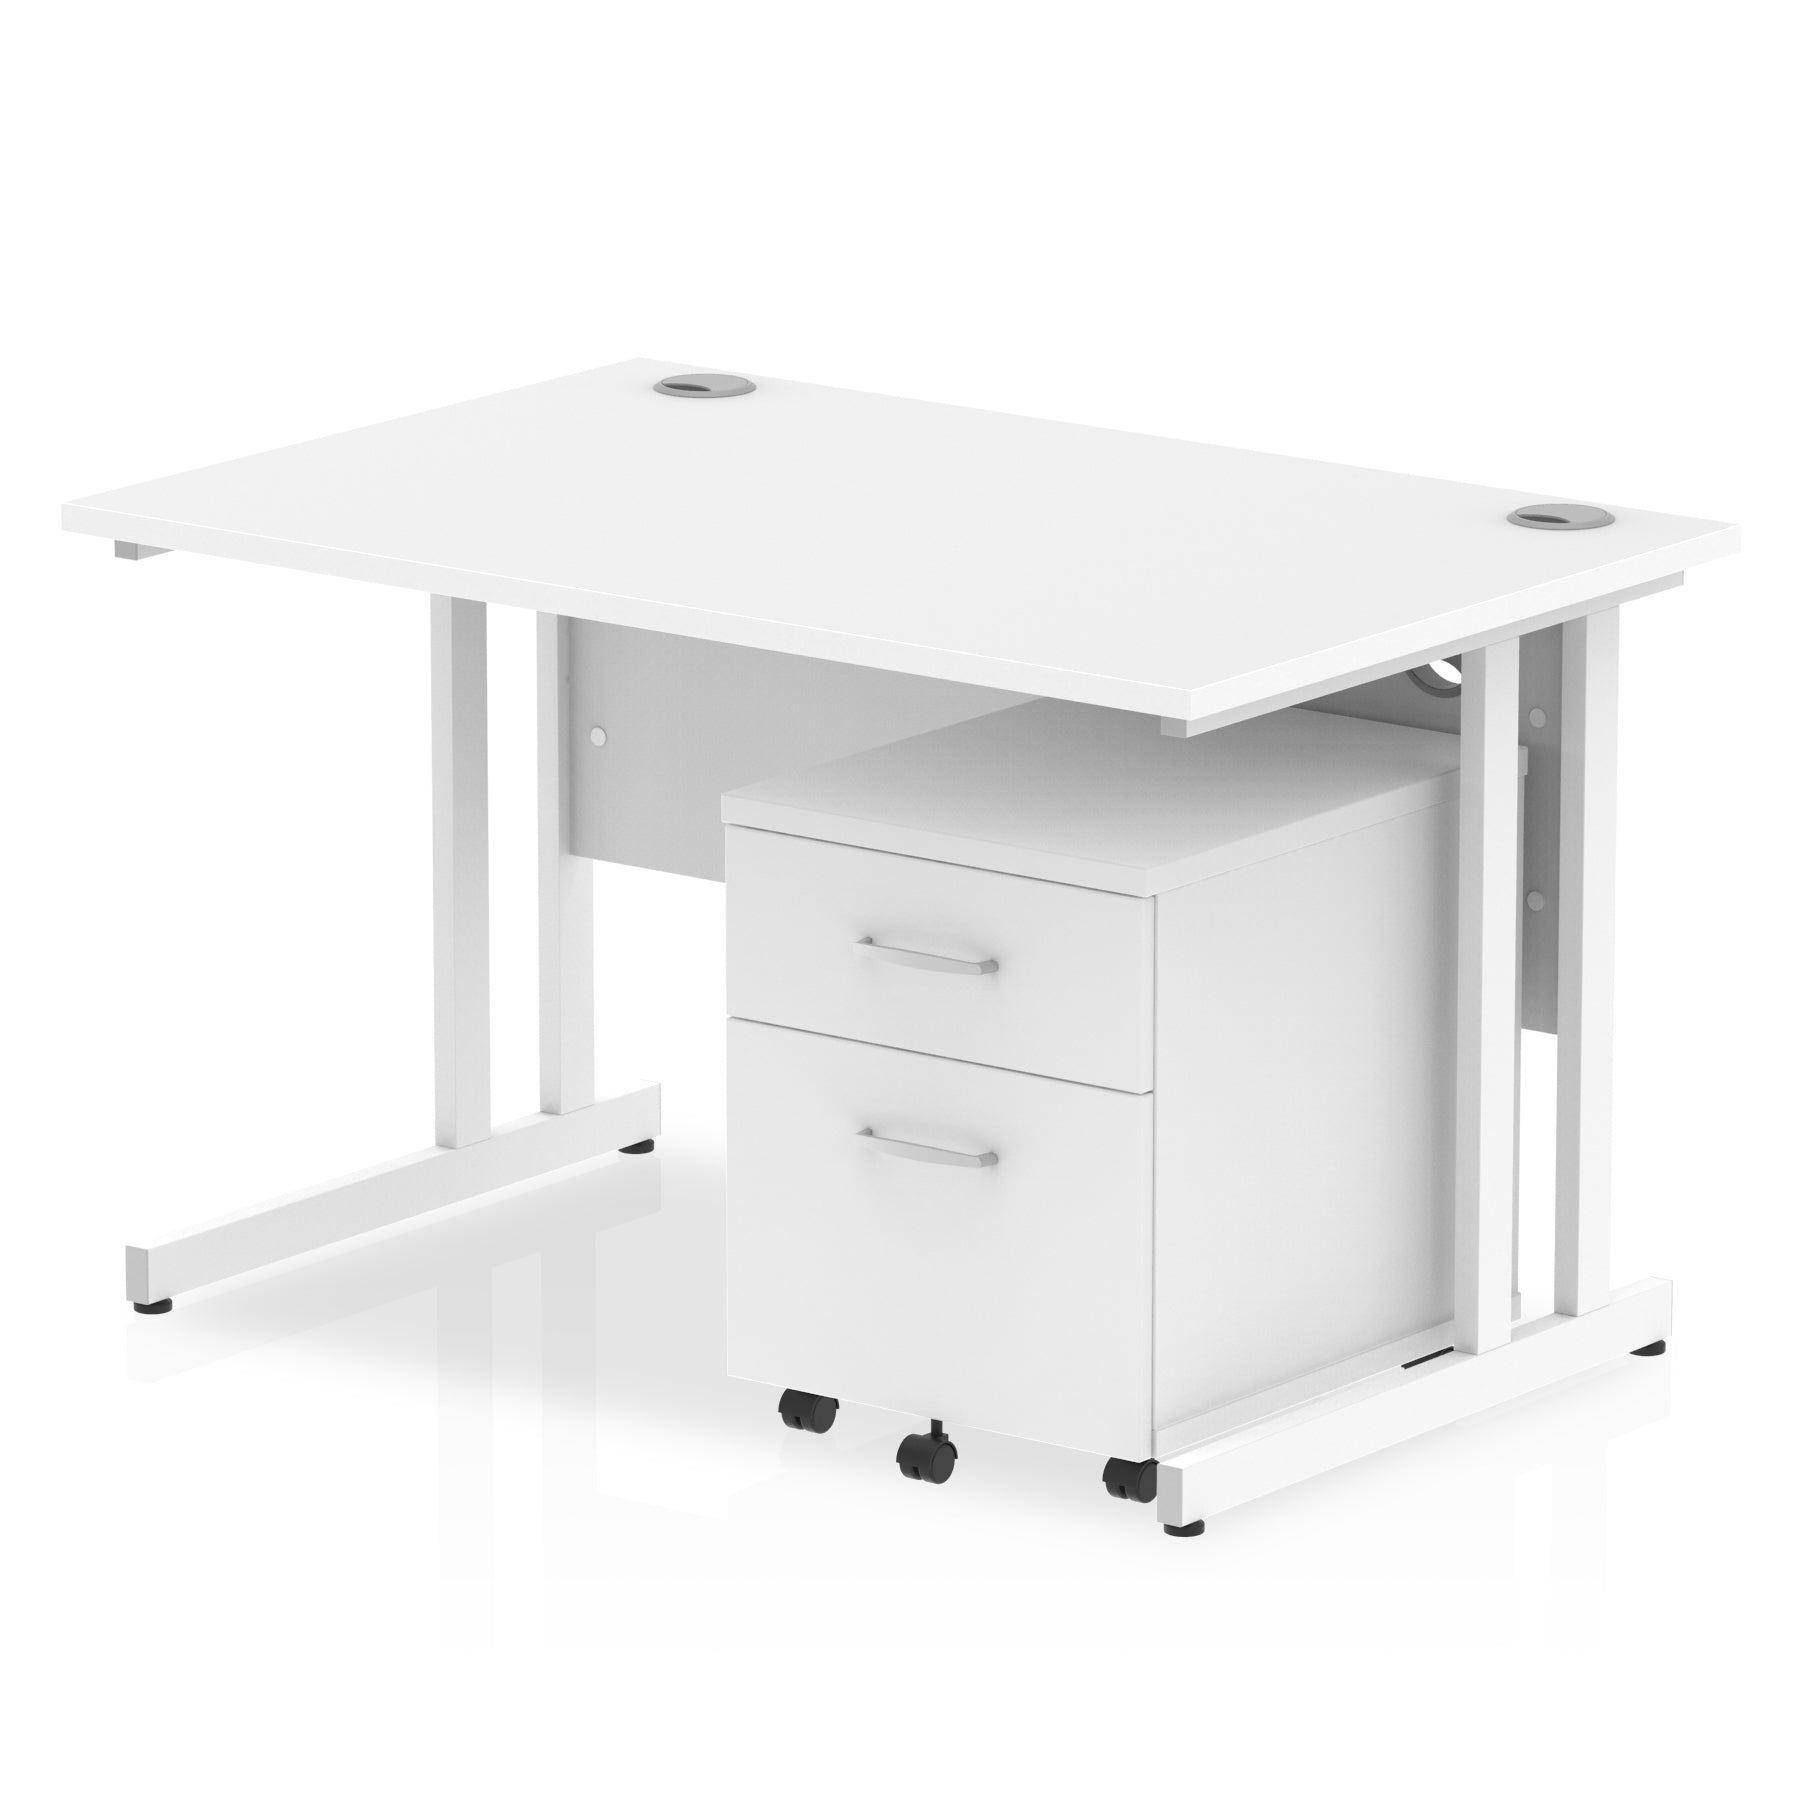 Impulse 1200mm Cantilever Straight Desk With Mobile Pedestal